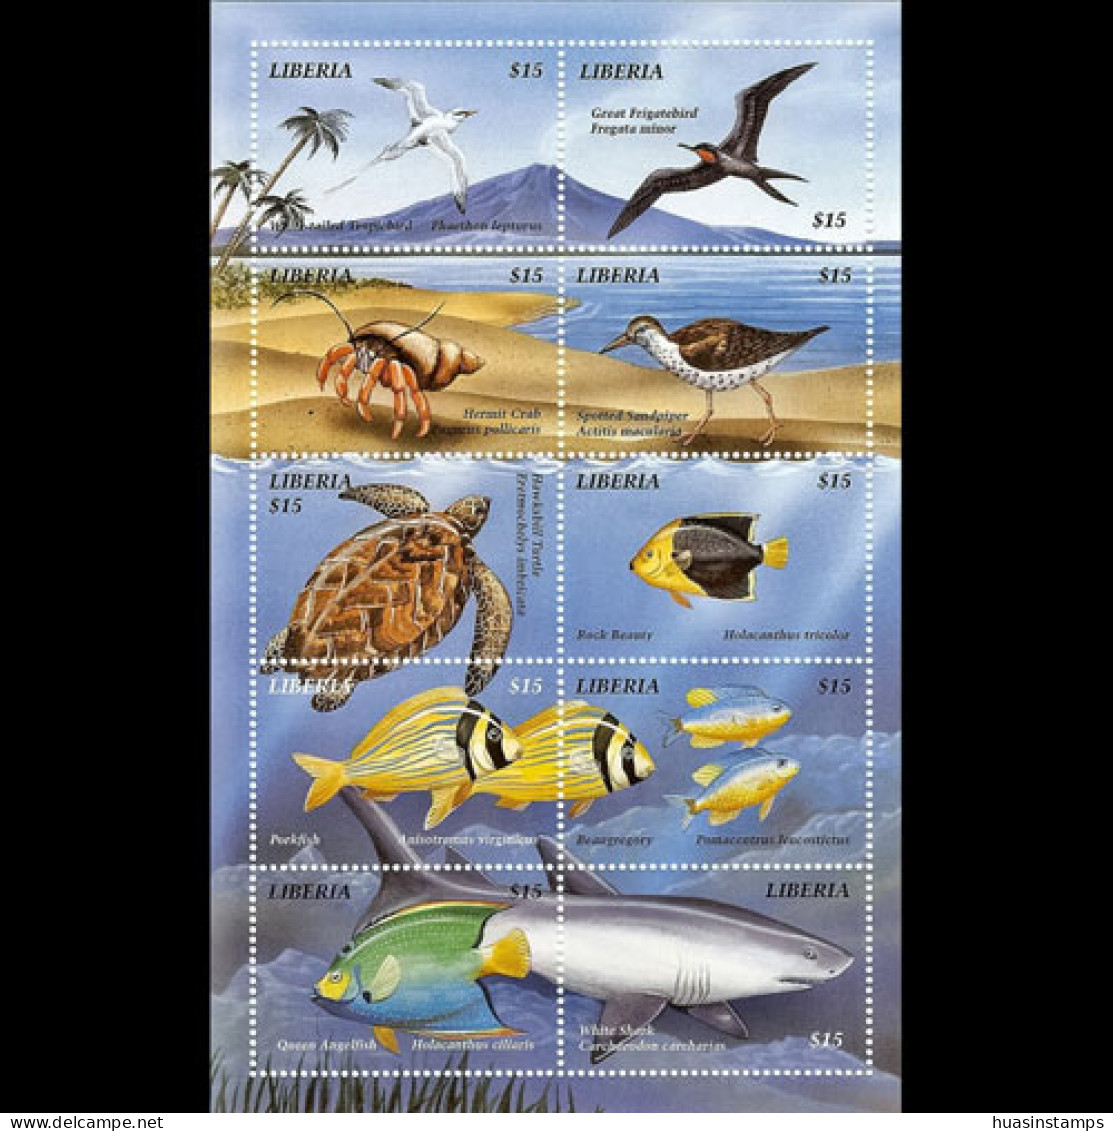 LIBERIA 1999 - MI# 2712 Sheet-Marine Life MNH - Liberia